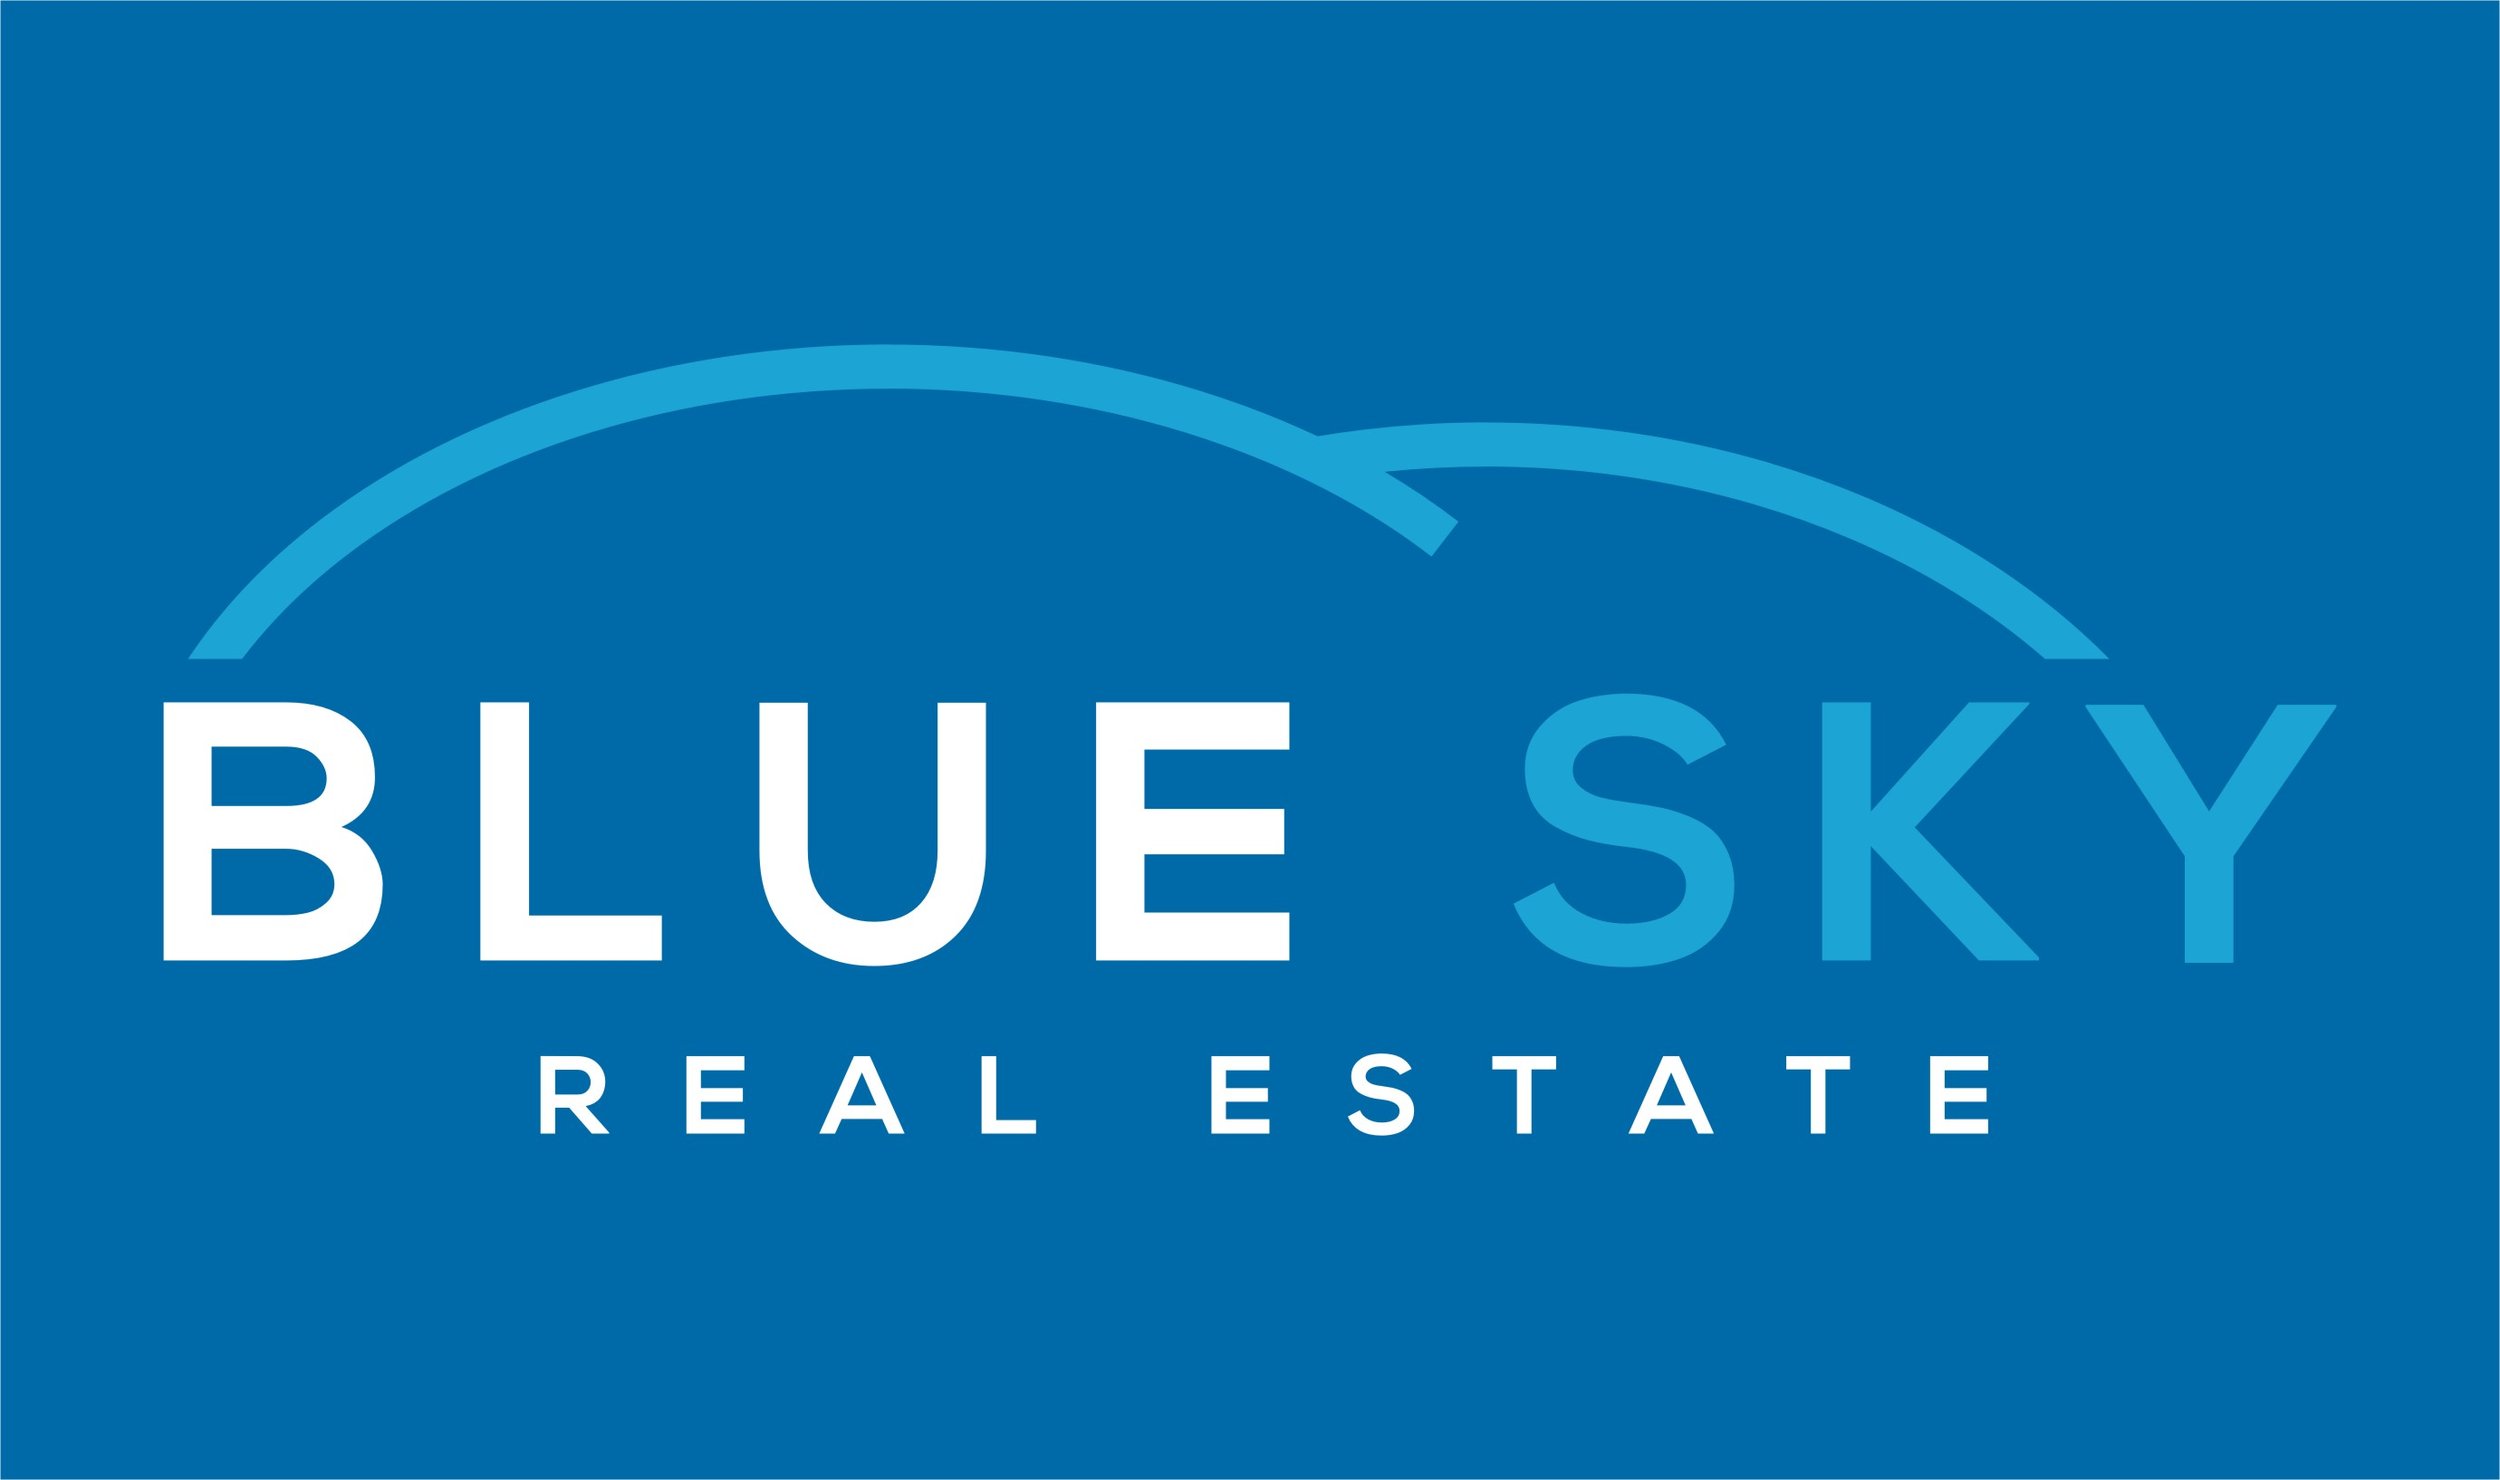 Blue Sky Real Estate opt 2.jpg